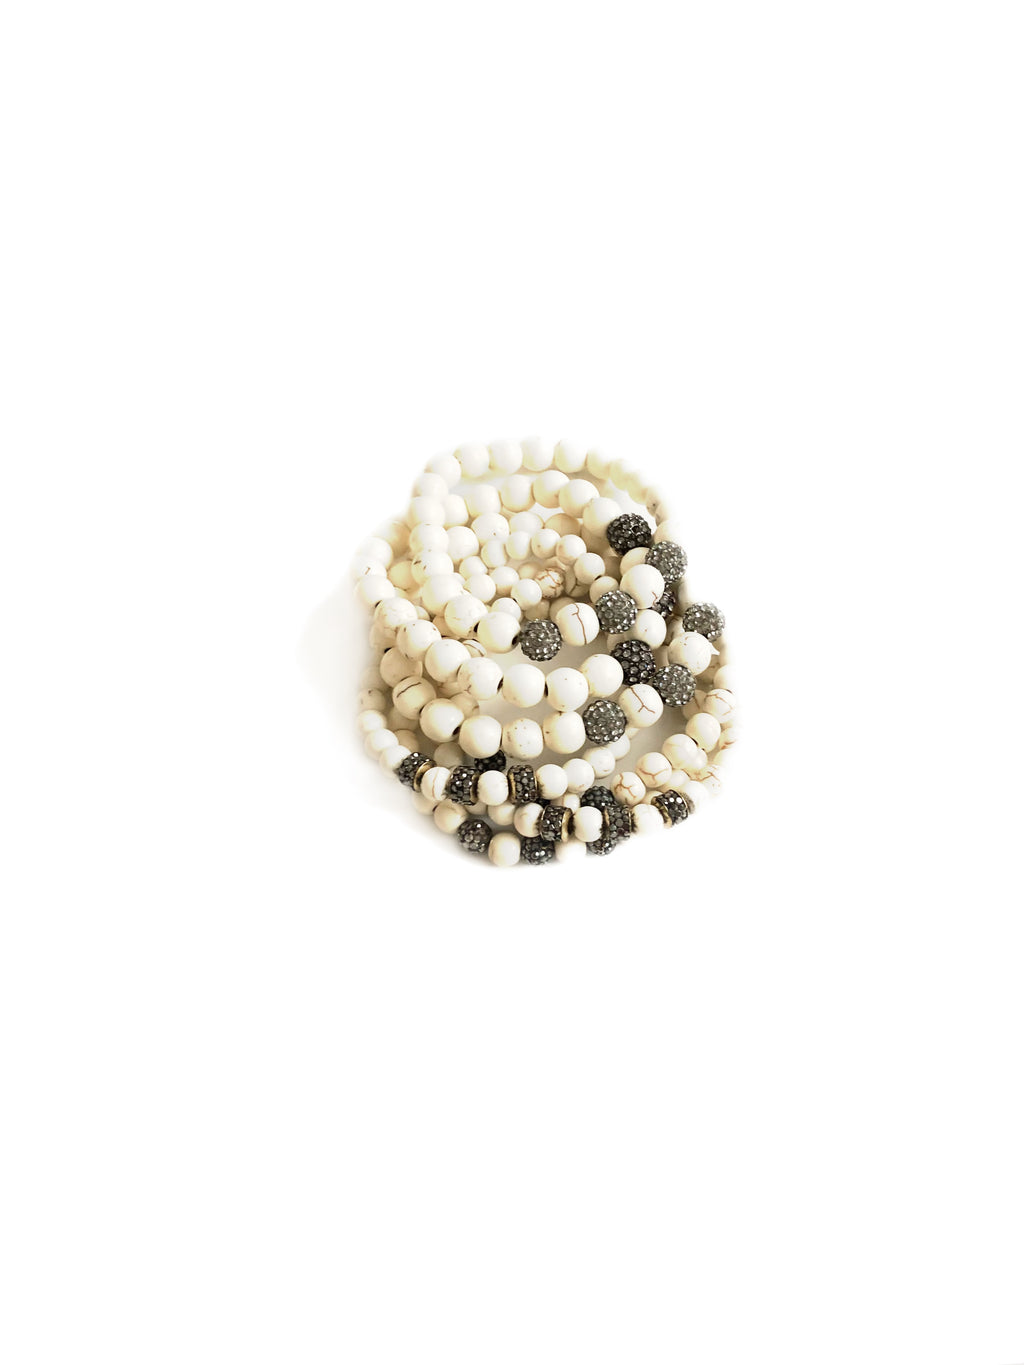 White Turquoise 6mm beads & Pave oblong Ball Bracelet